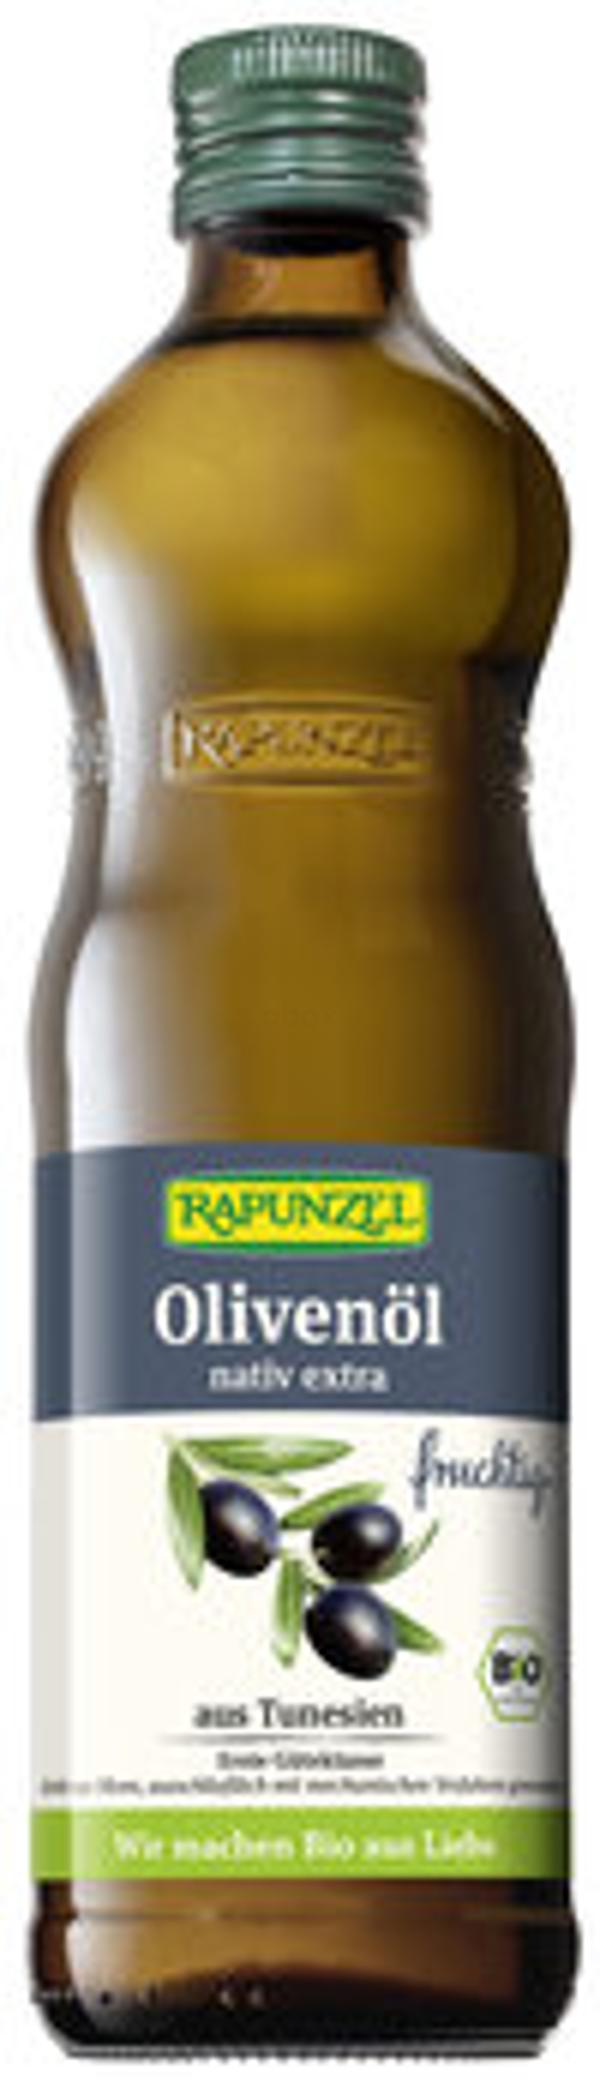 Produktfoto zu Olivenöl nativ extra fruchtig, 0,5 l